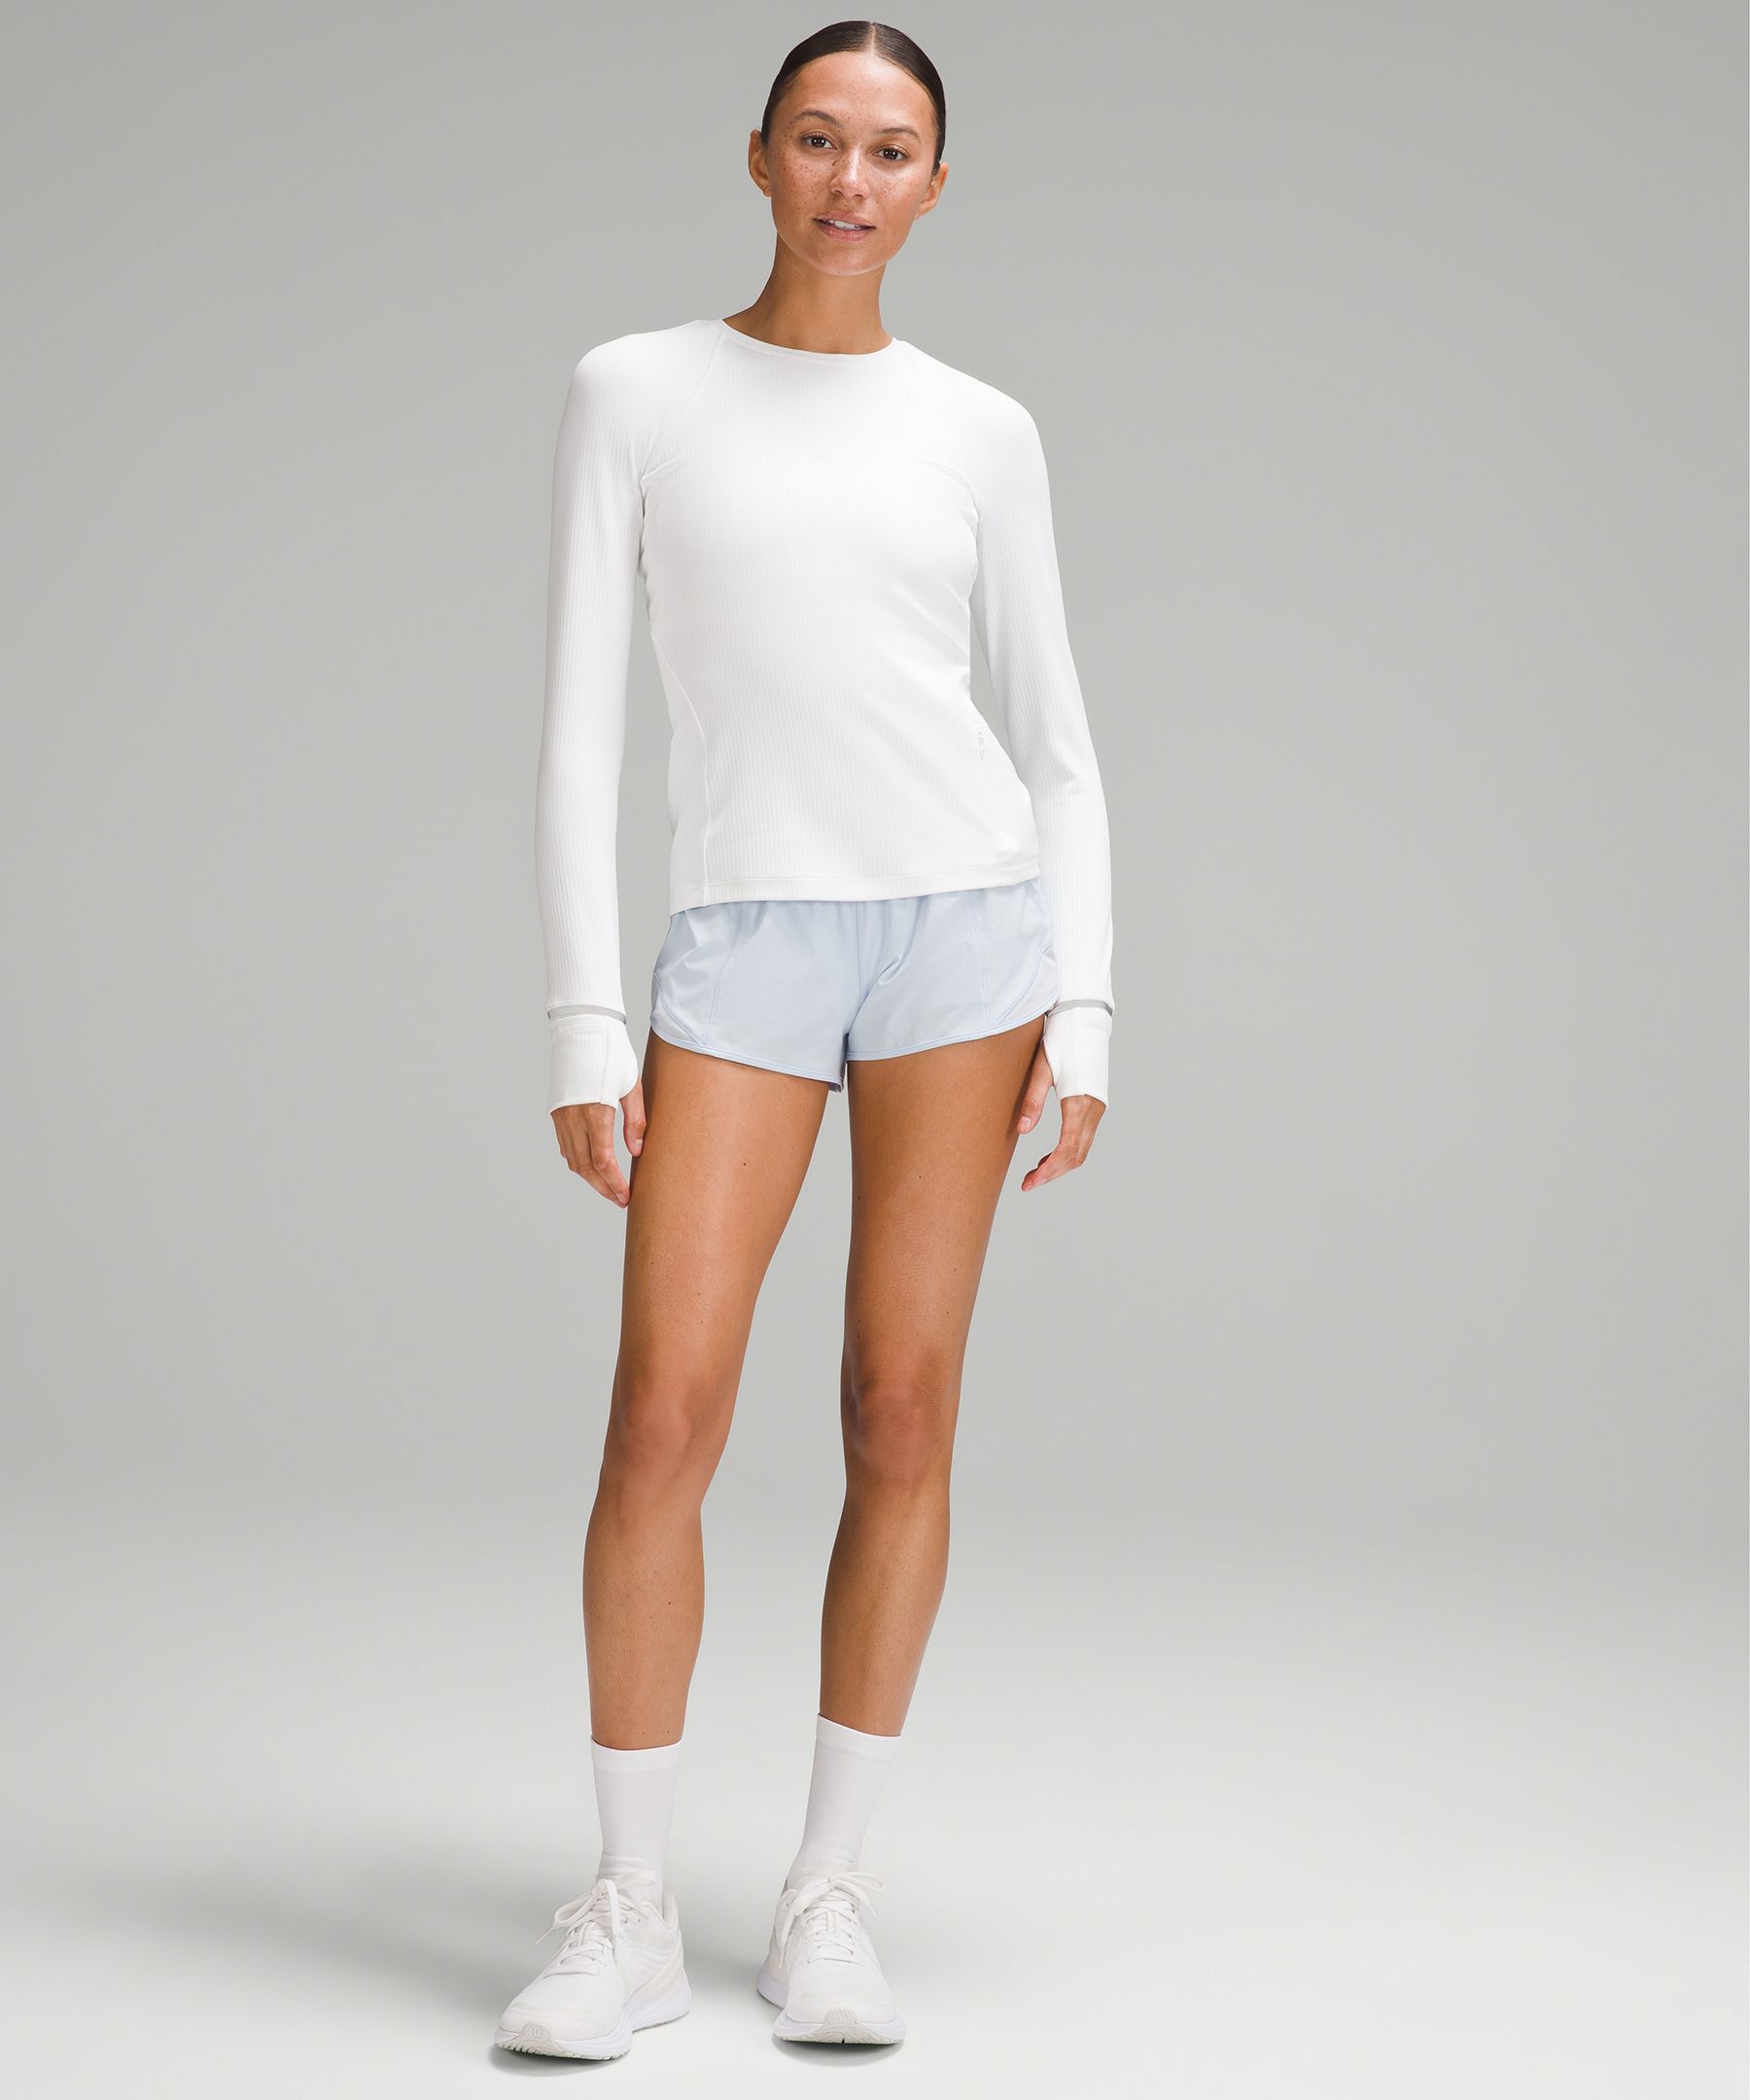 Lululemon running shorts size 2 - $35 - From Michaela